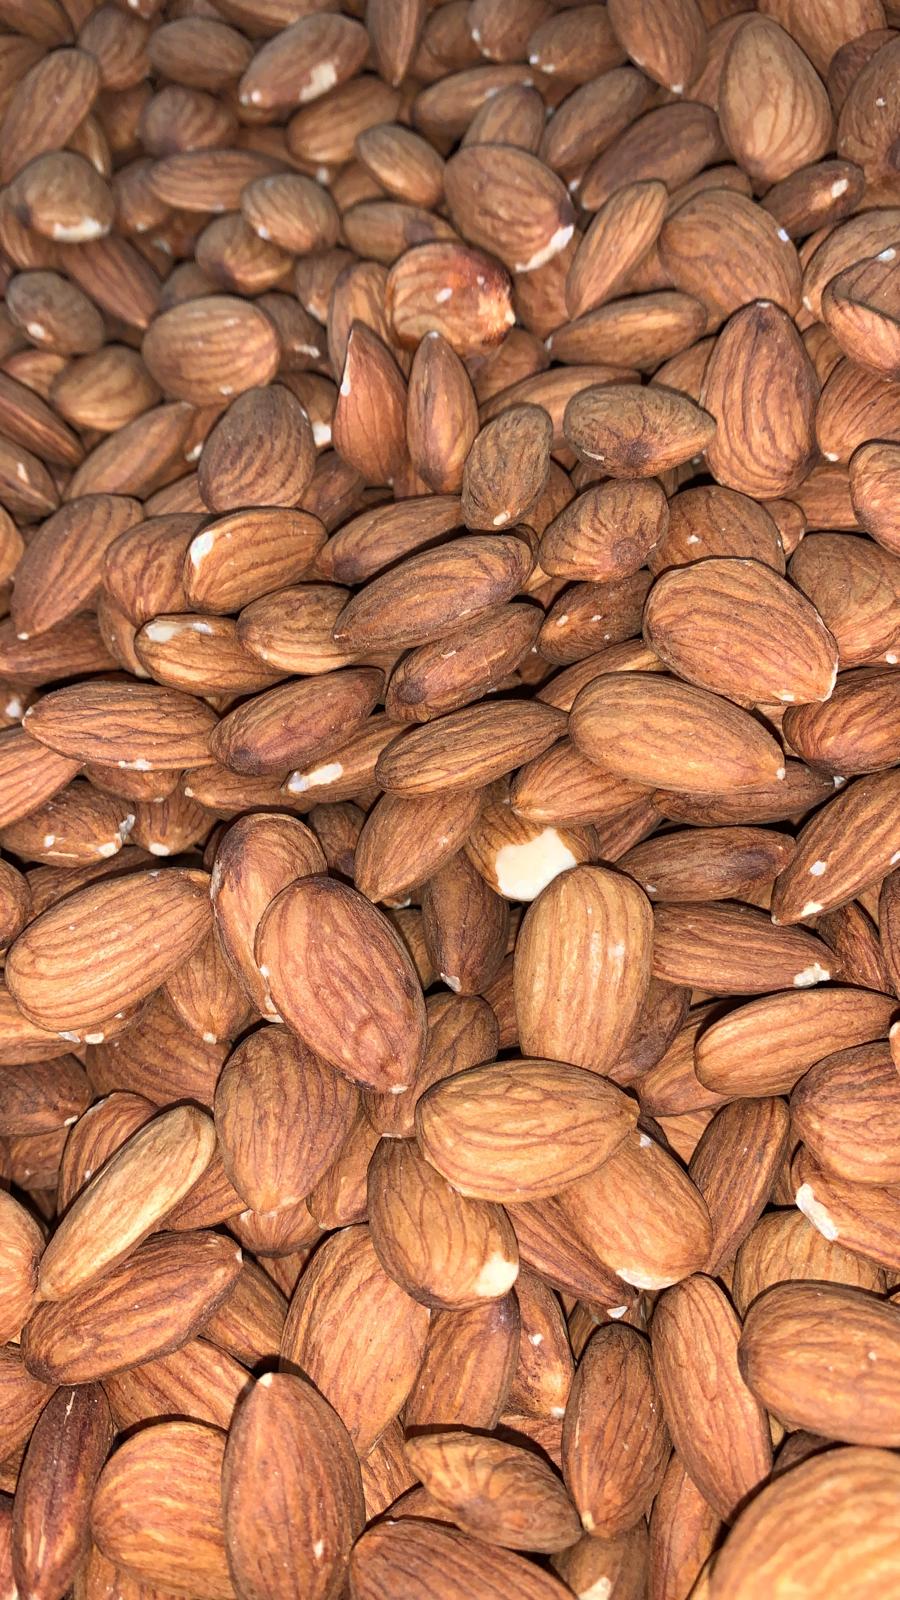 Raw Nuts&Dry Fruits Mix LB - Pasha Market